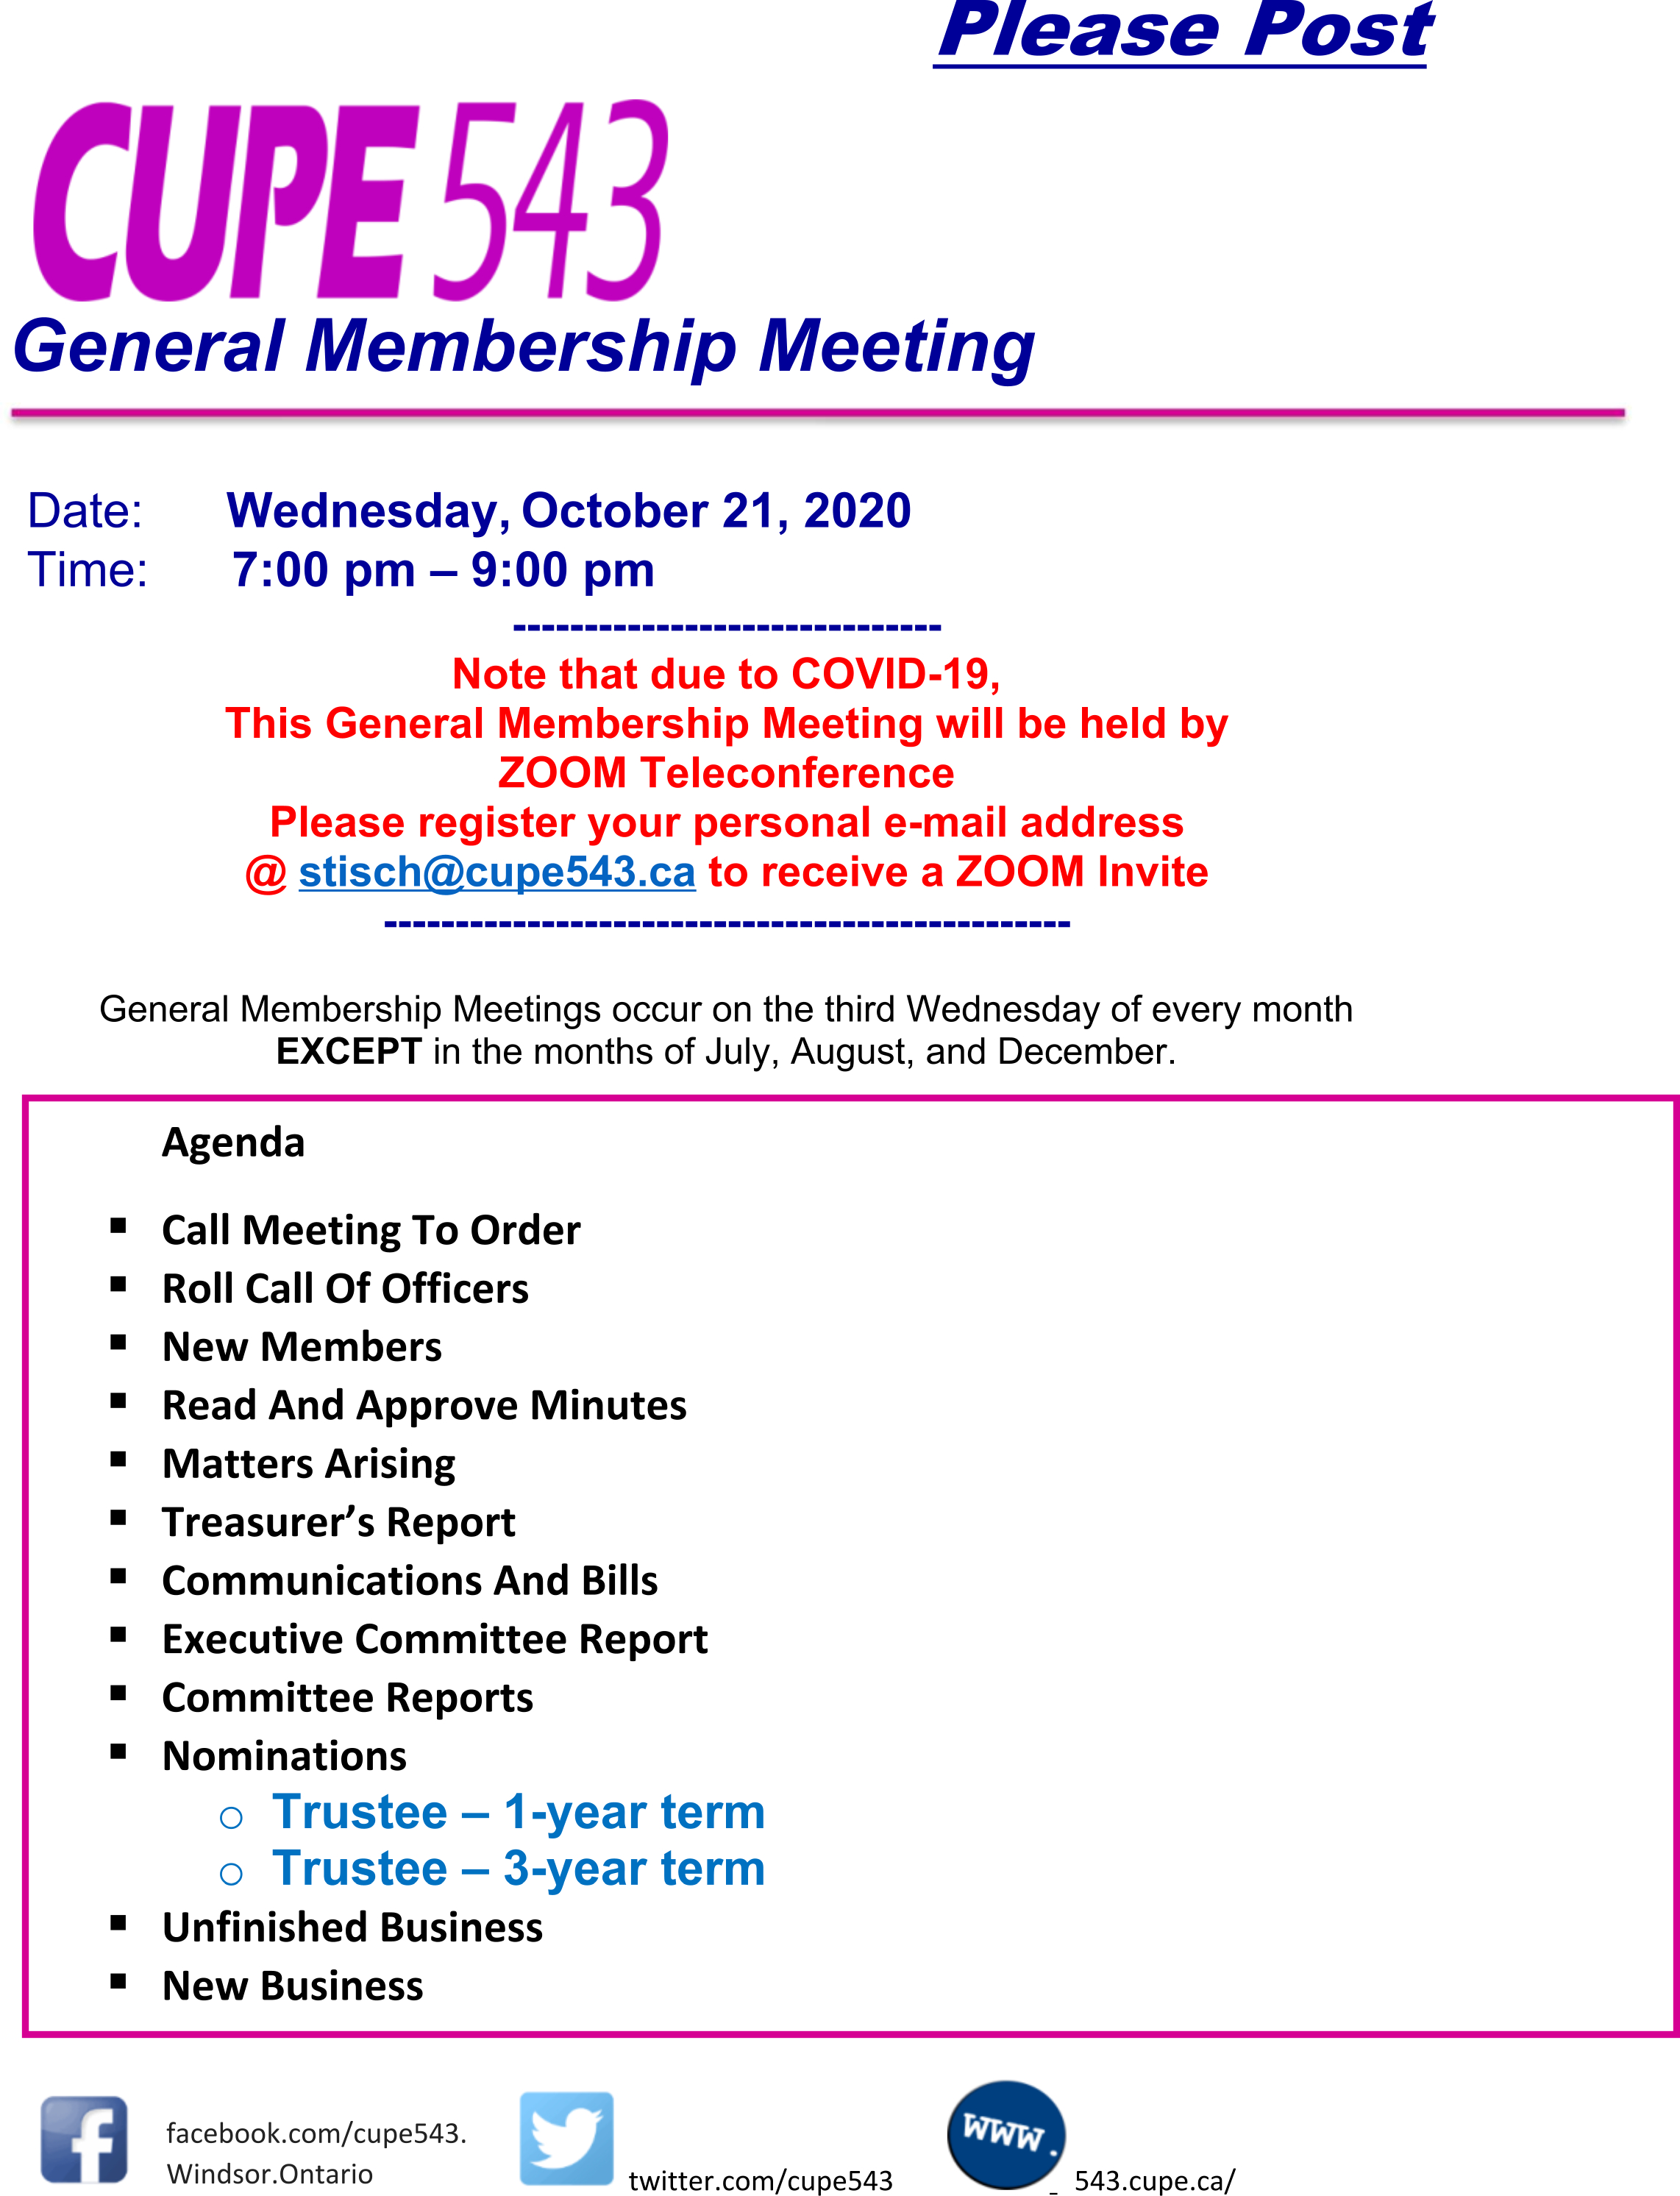 General Membership Meeting and Trustee Nominations @ Zoom